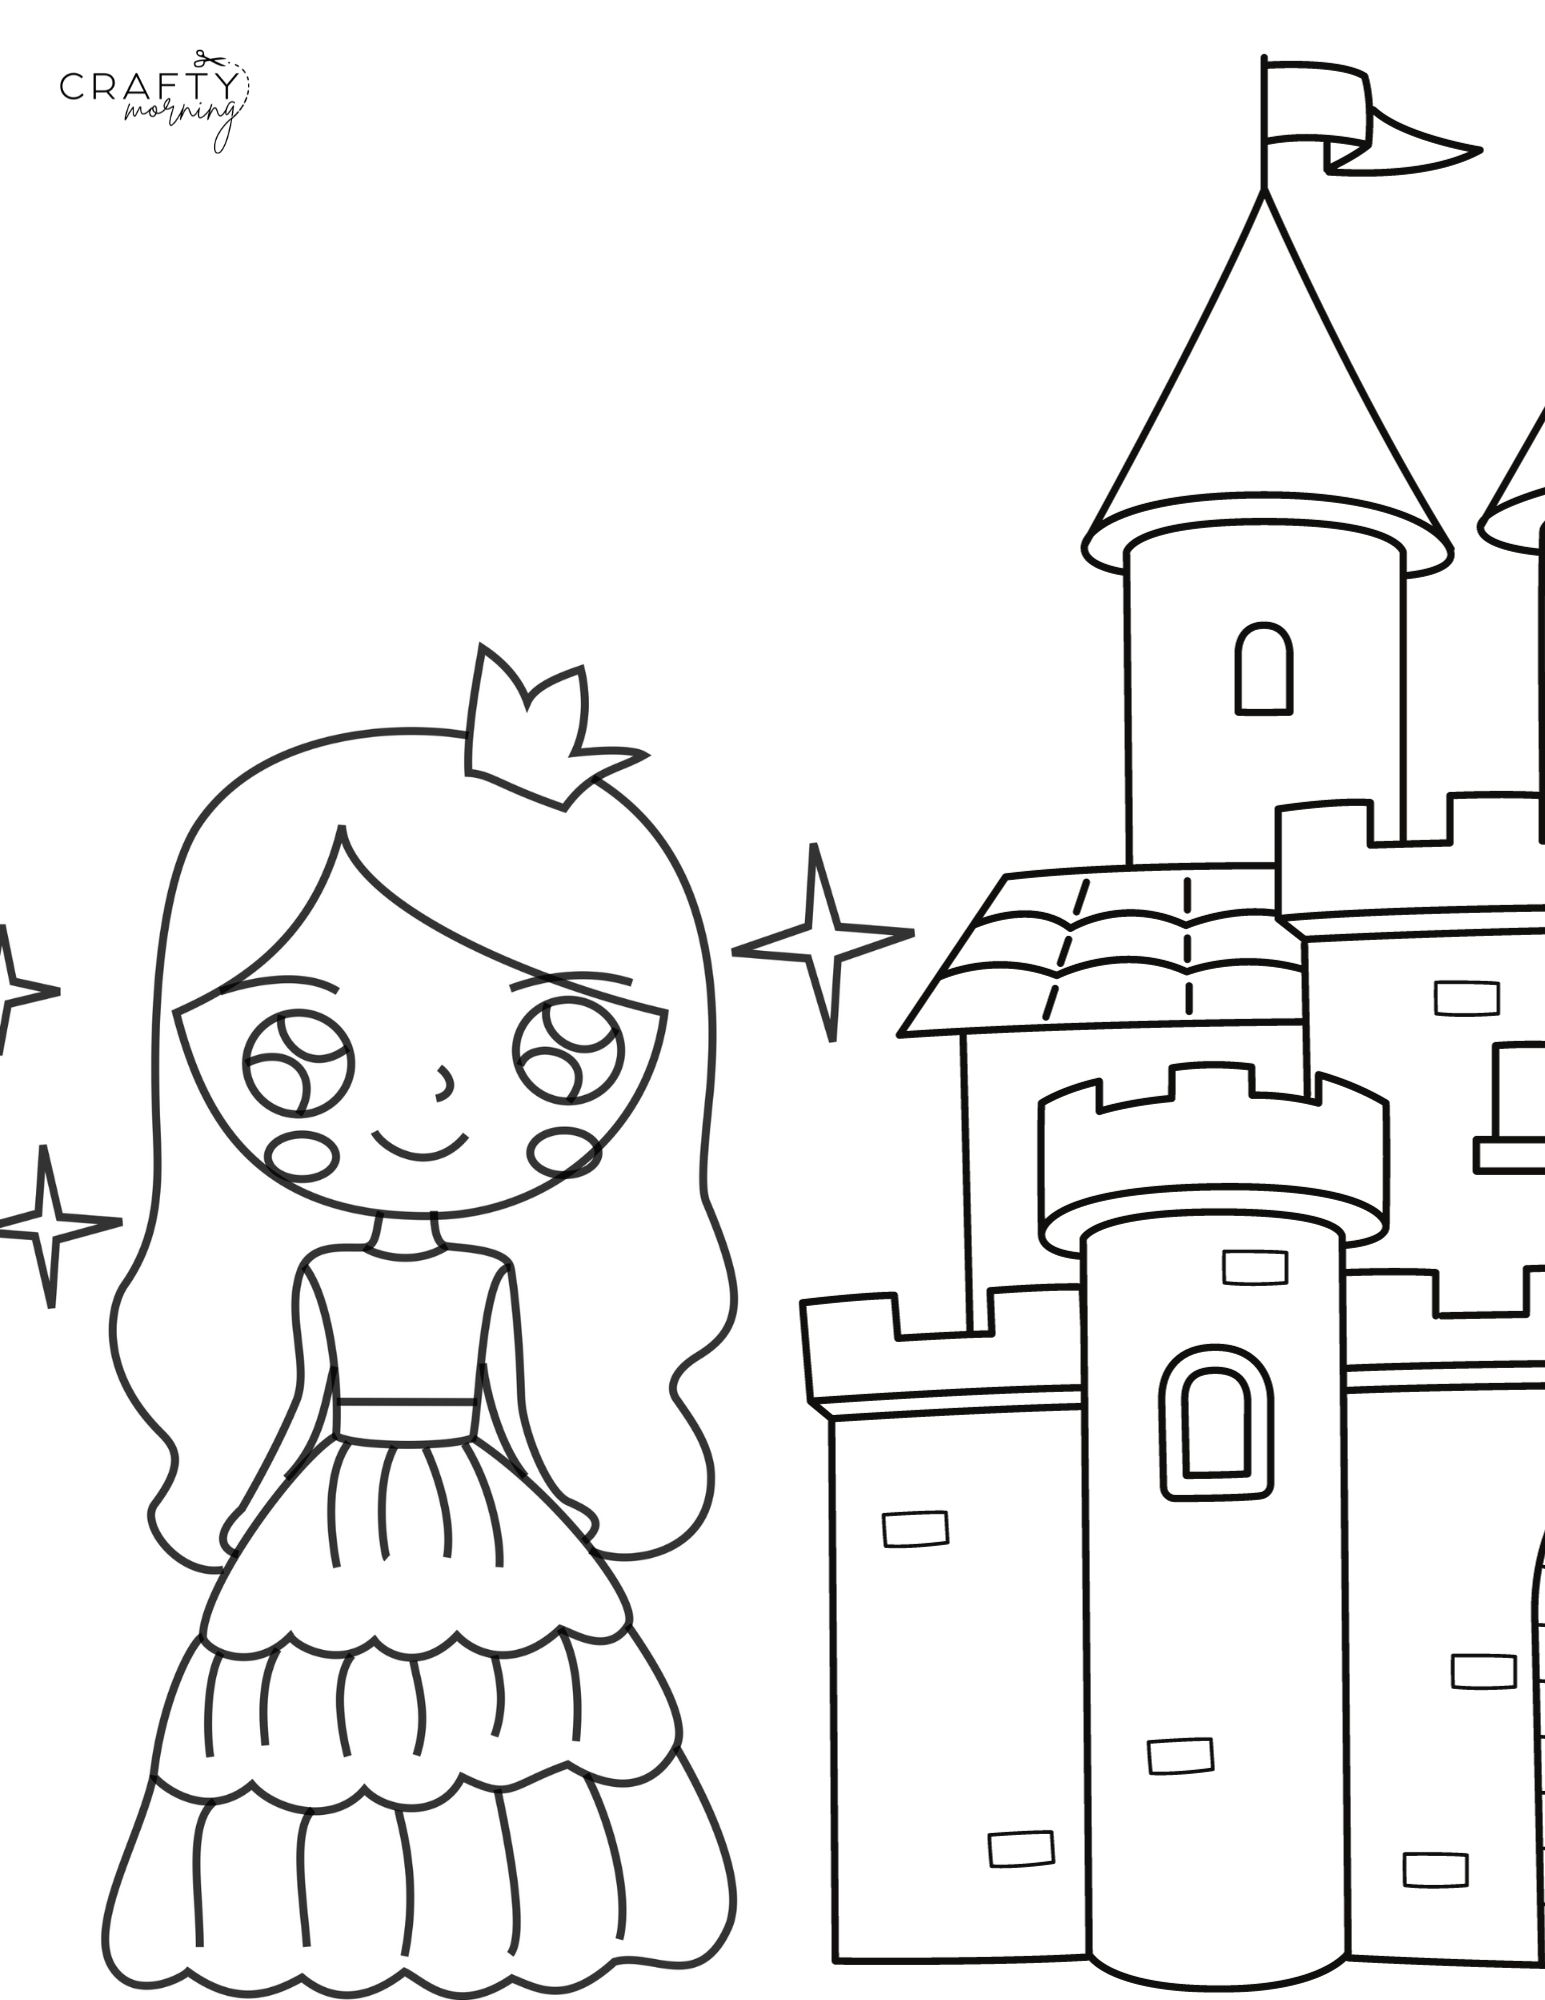 25 Easy Princess Drawing Ideas - How to Draw a Princess